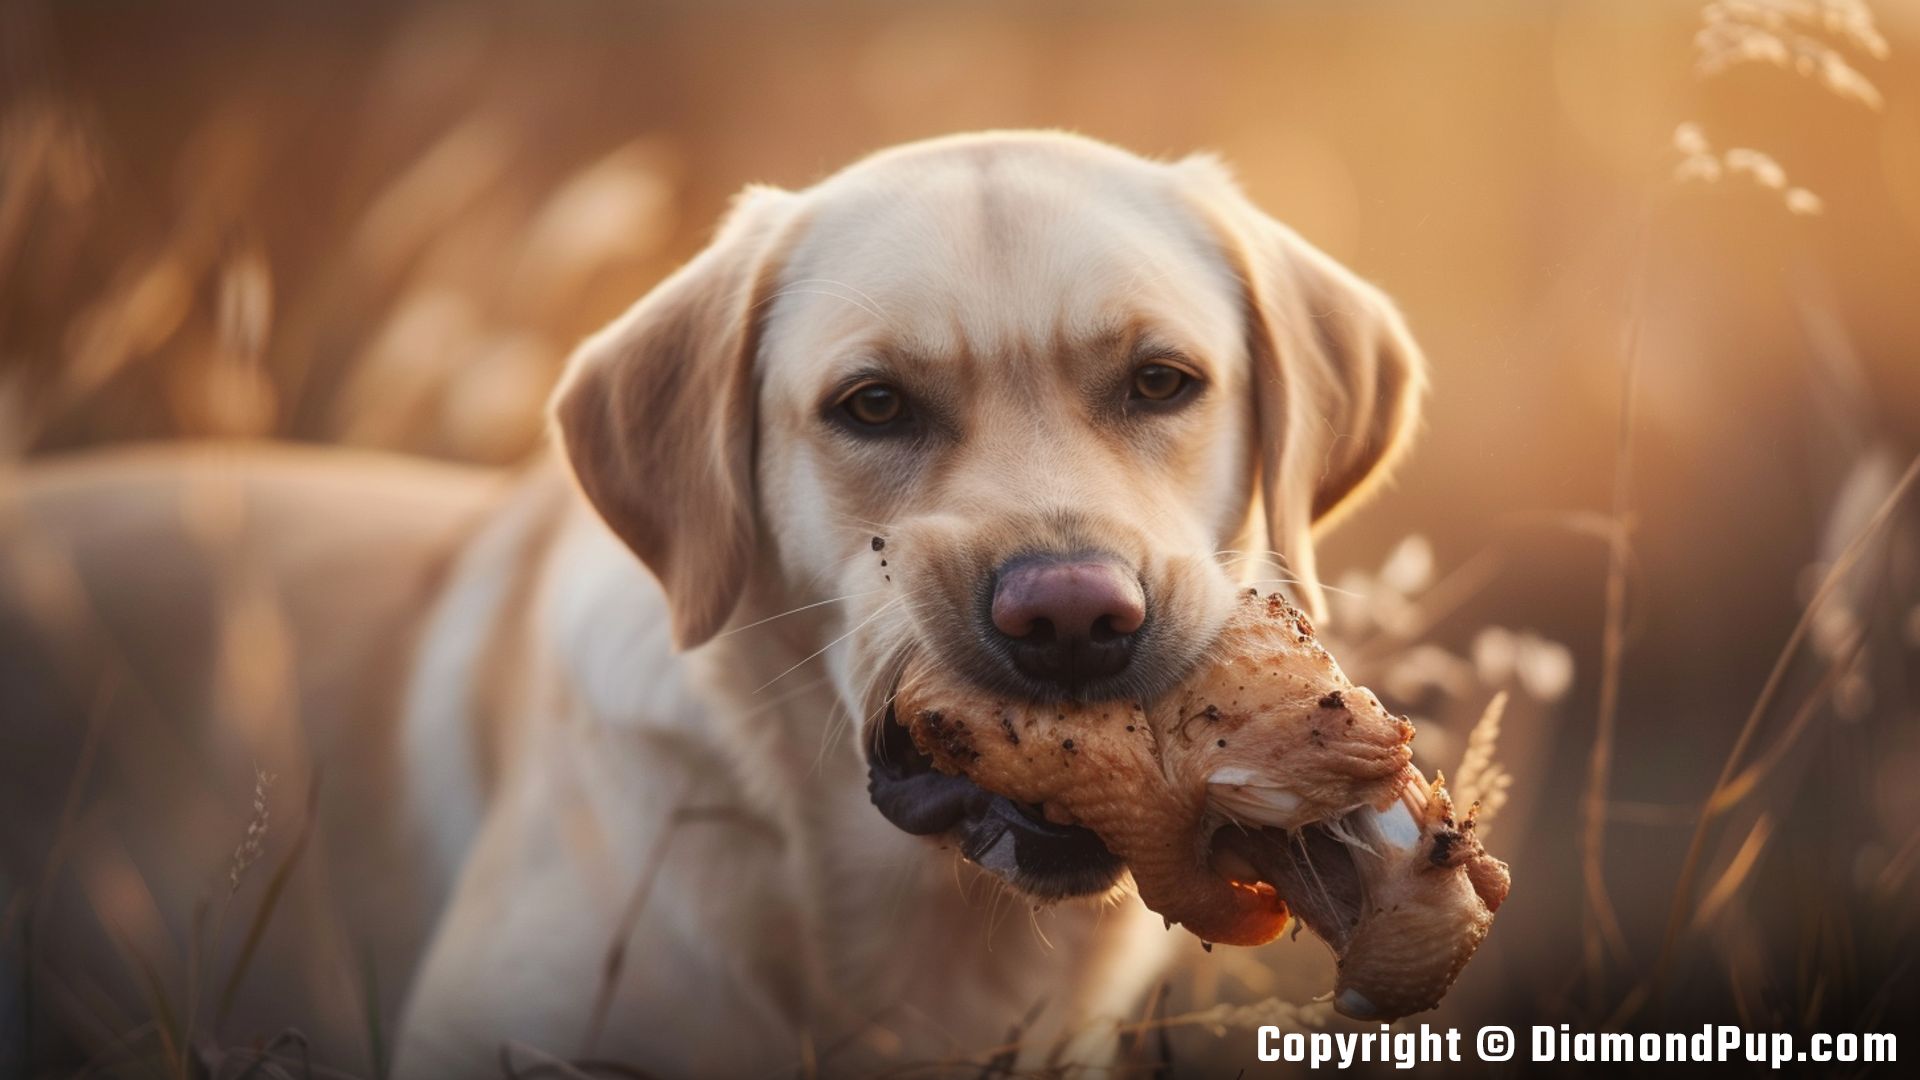 Photograph of a Cute Labrador Snacking on Chicken